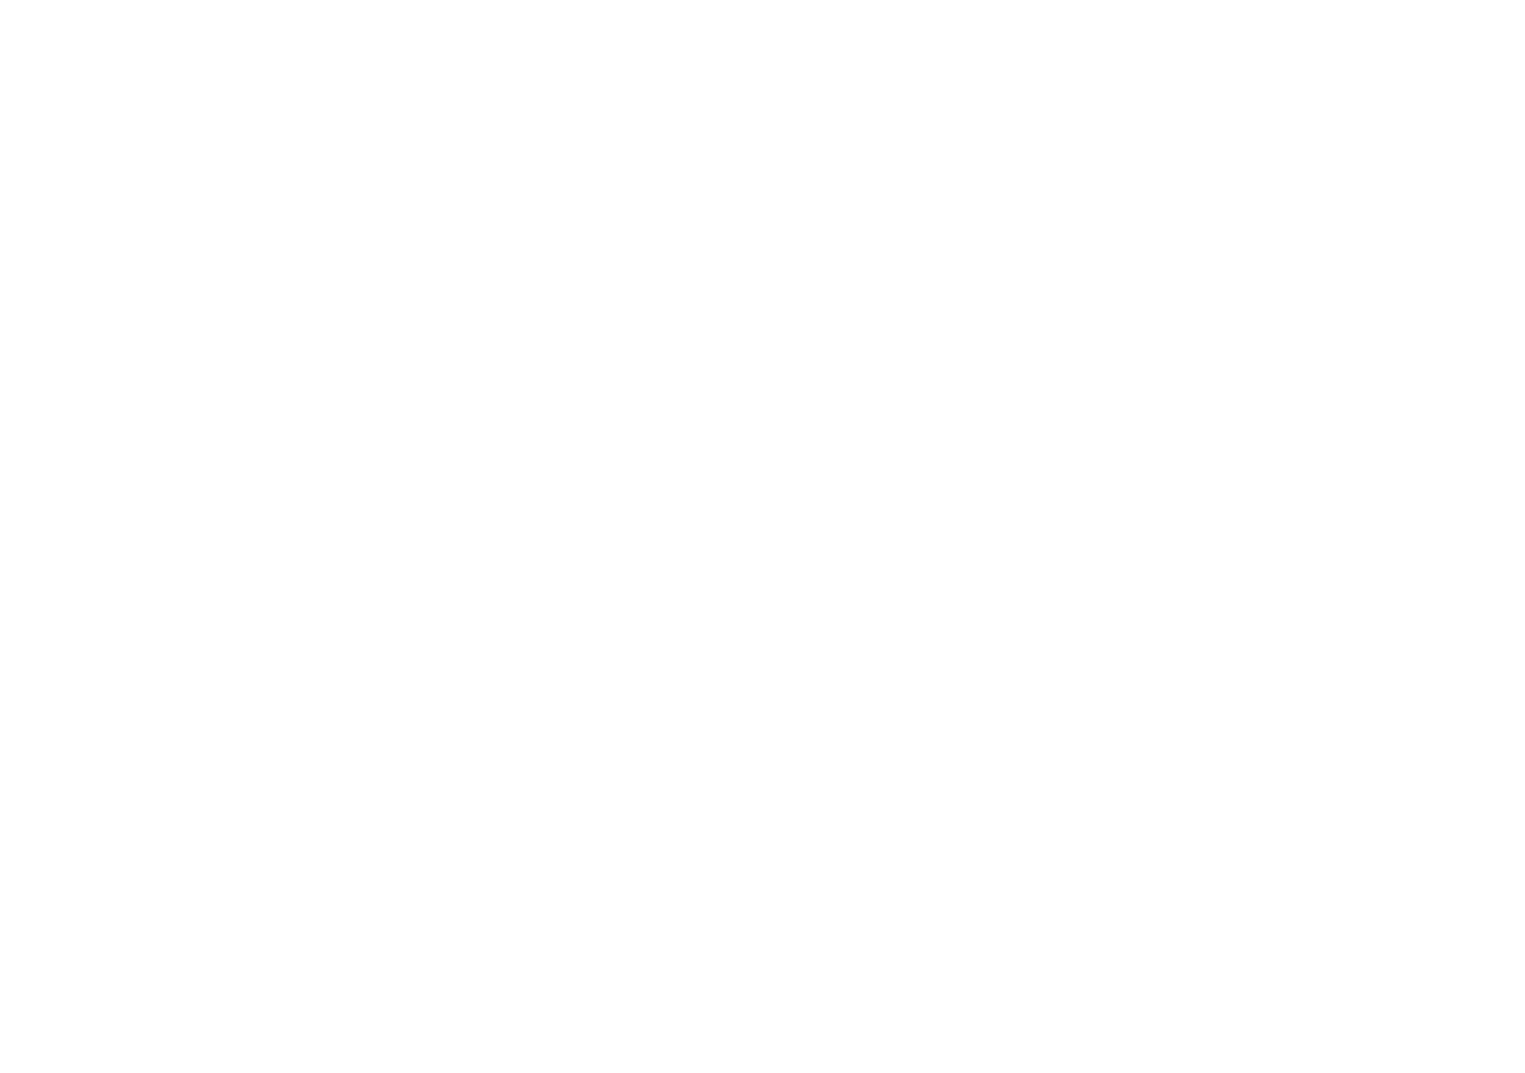 Comerica logo for dark backgrounds (transparent PNG)